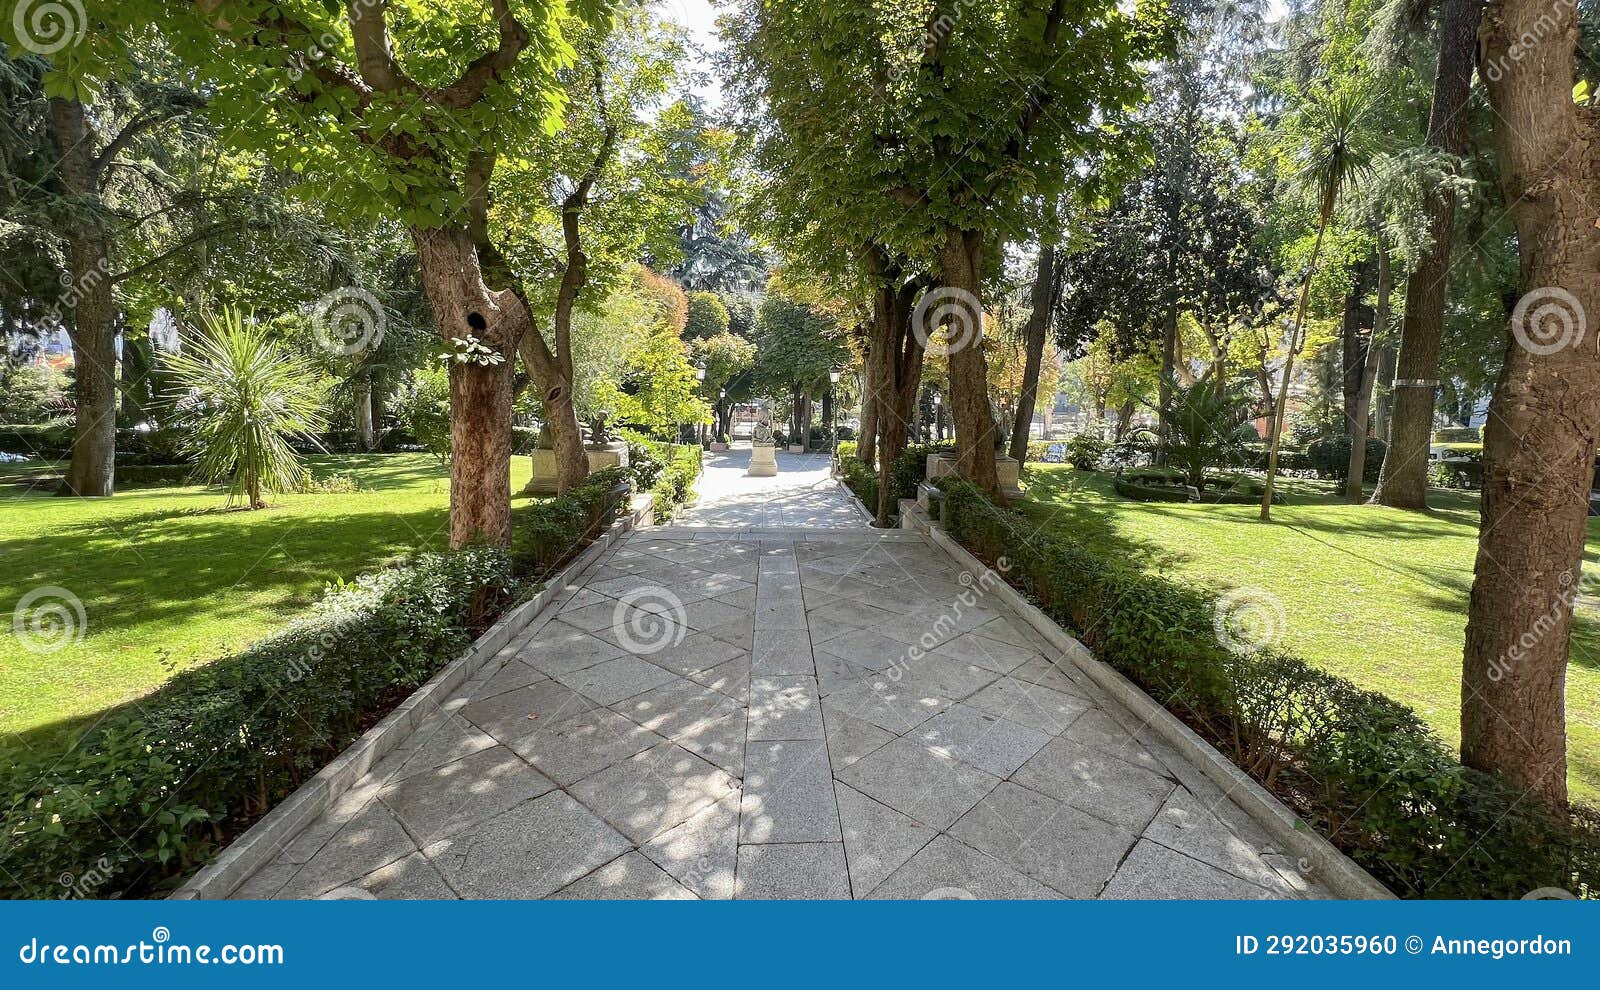 the buenavista palace gardens in madrid, spain